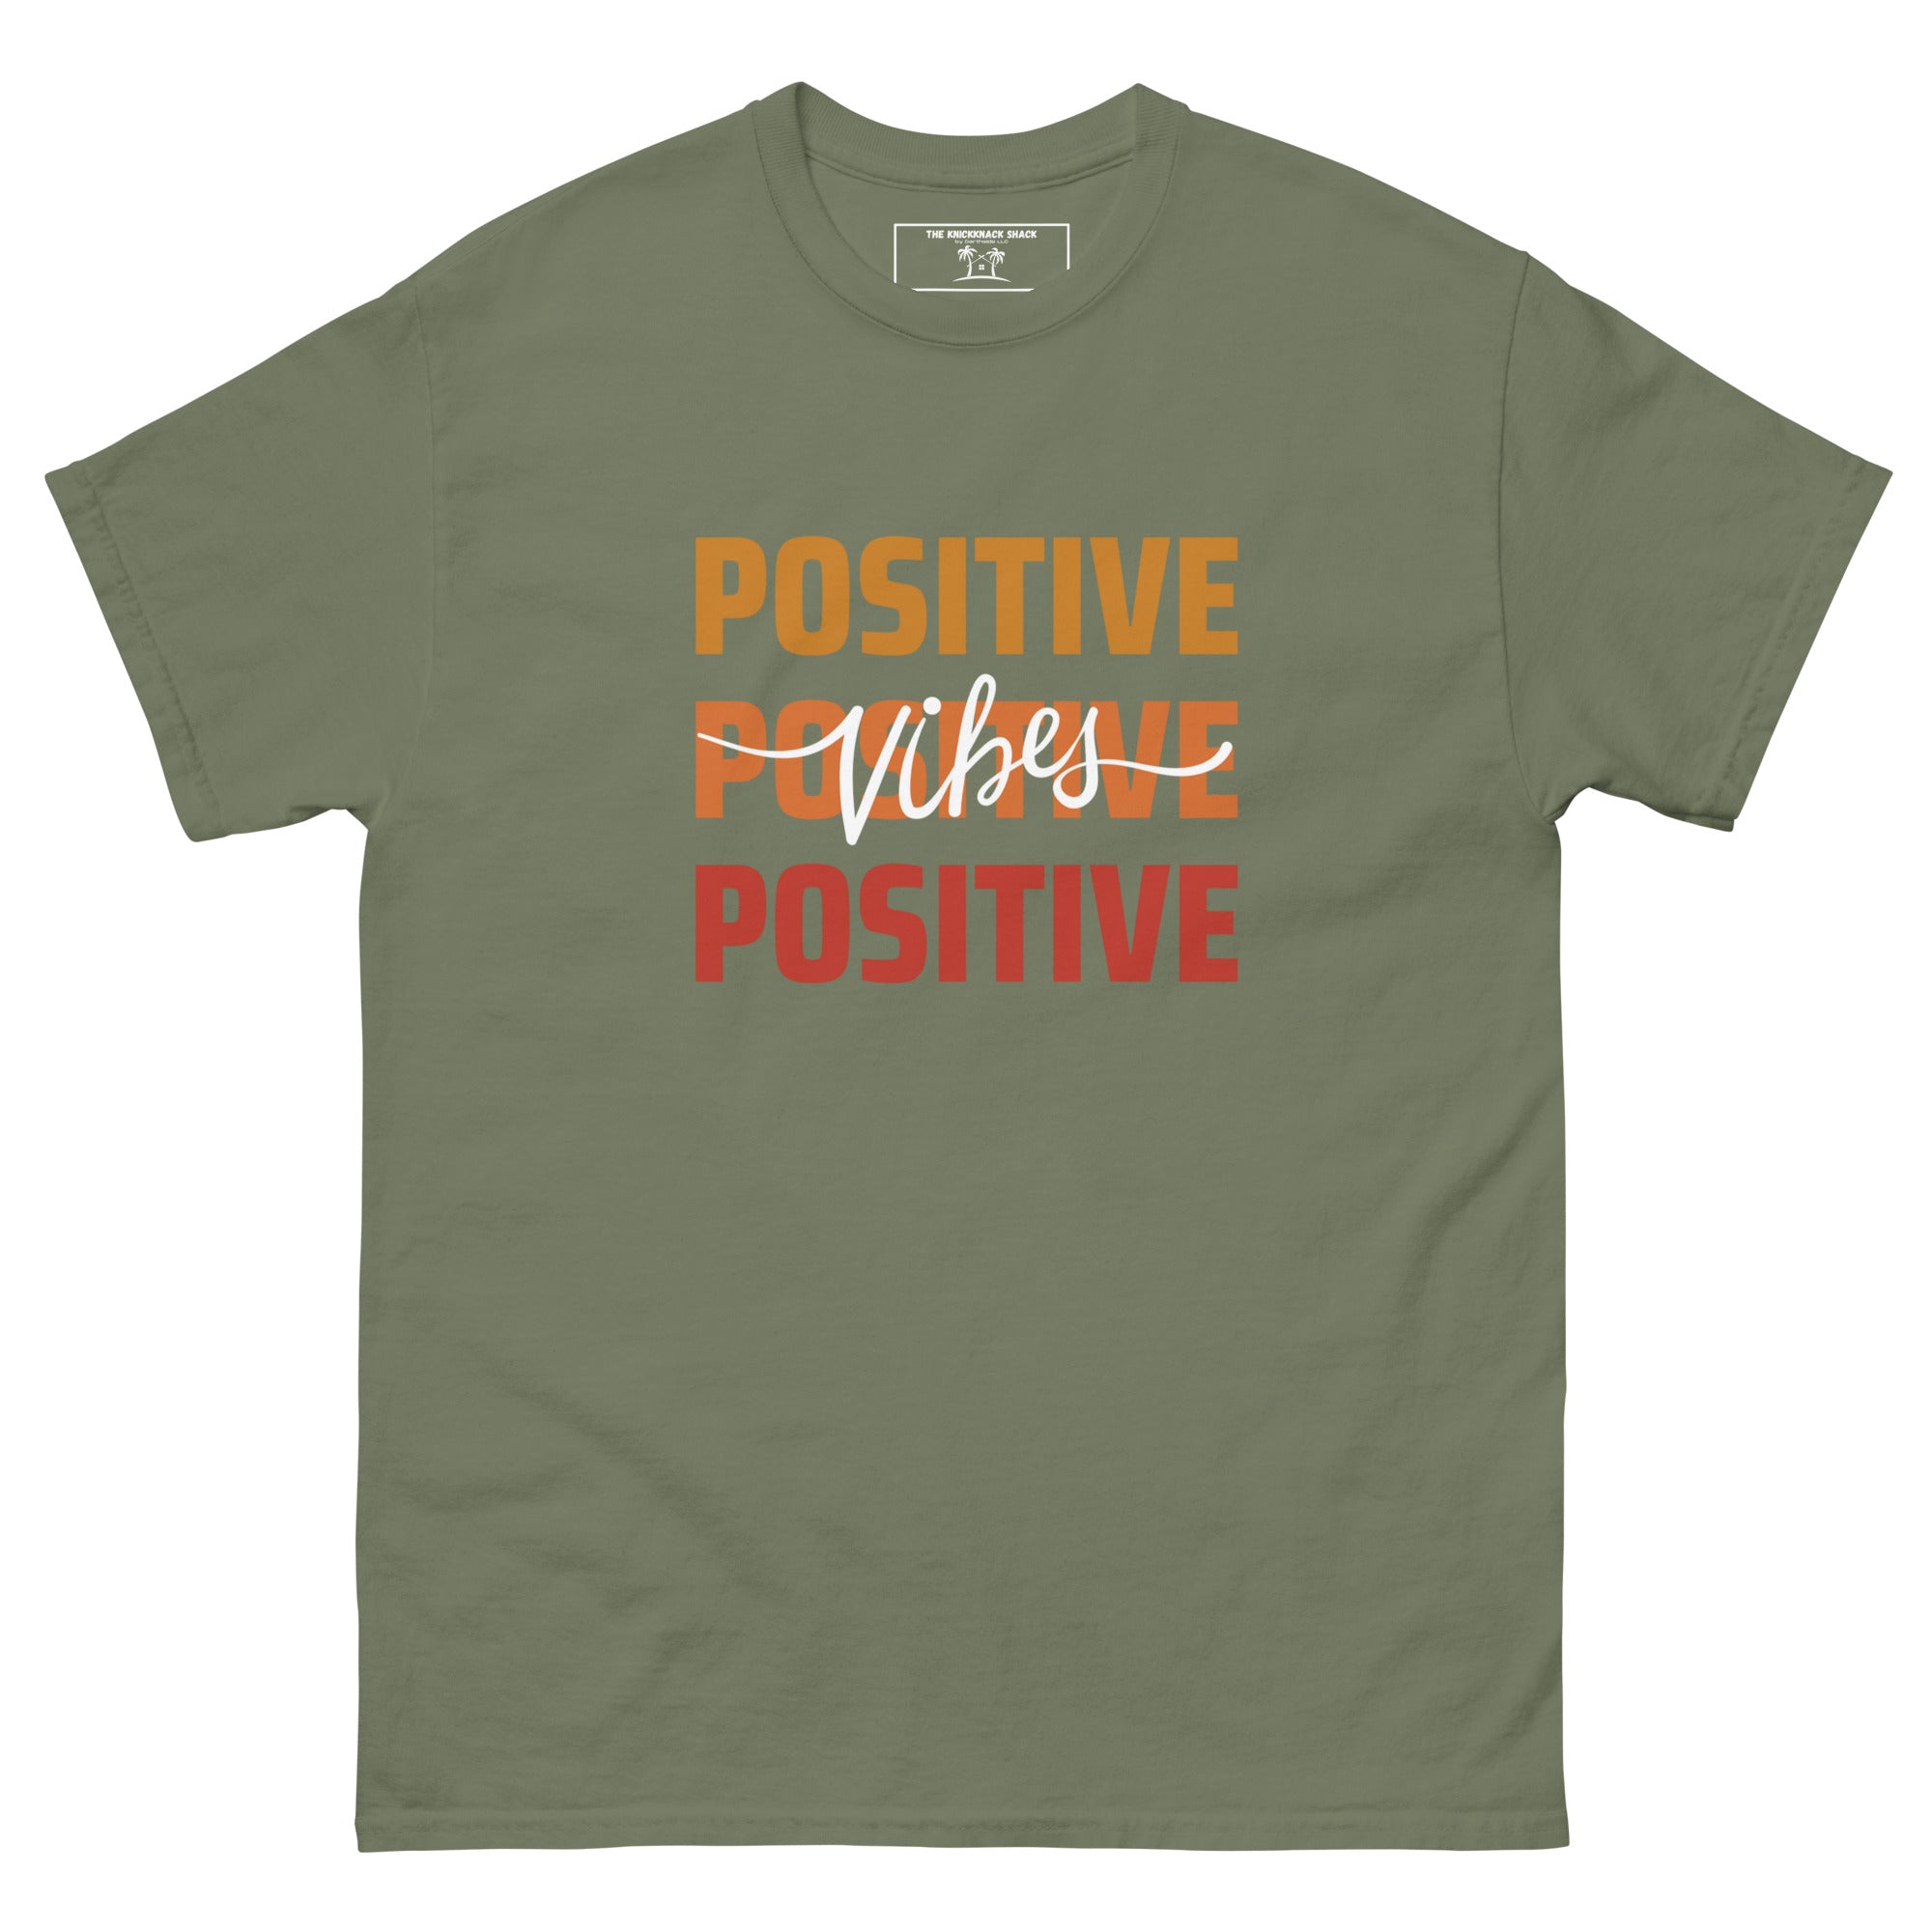 Camiseta clásica - Vibraciones positivas (colores oscuros)